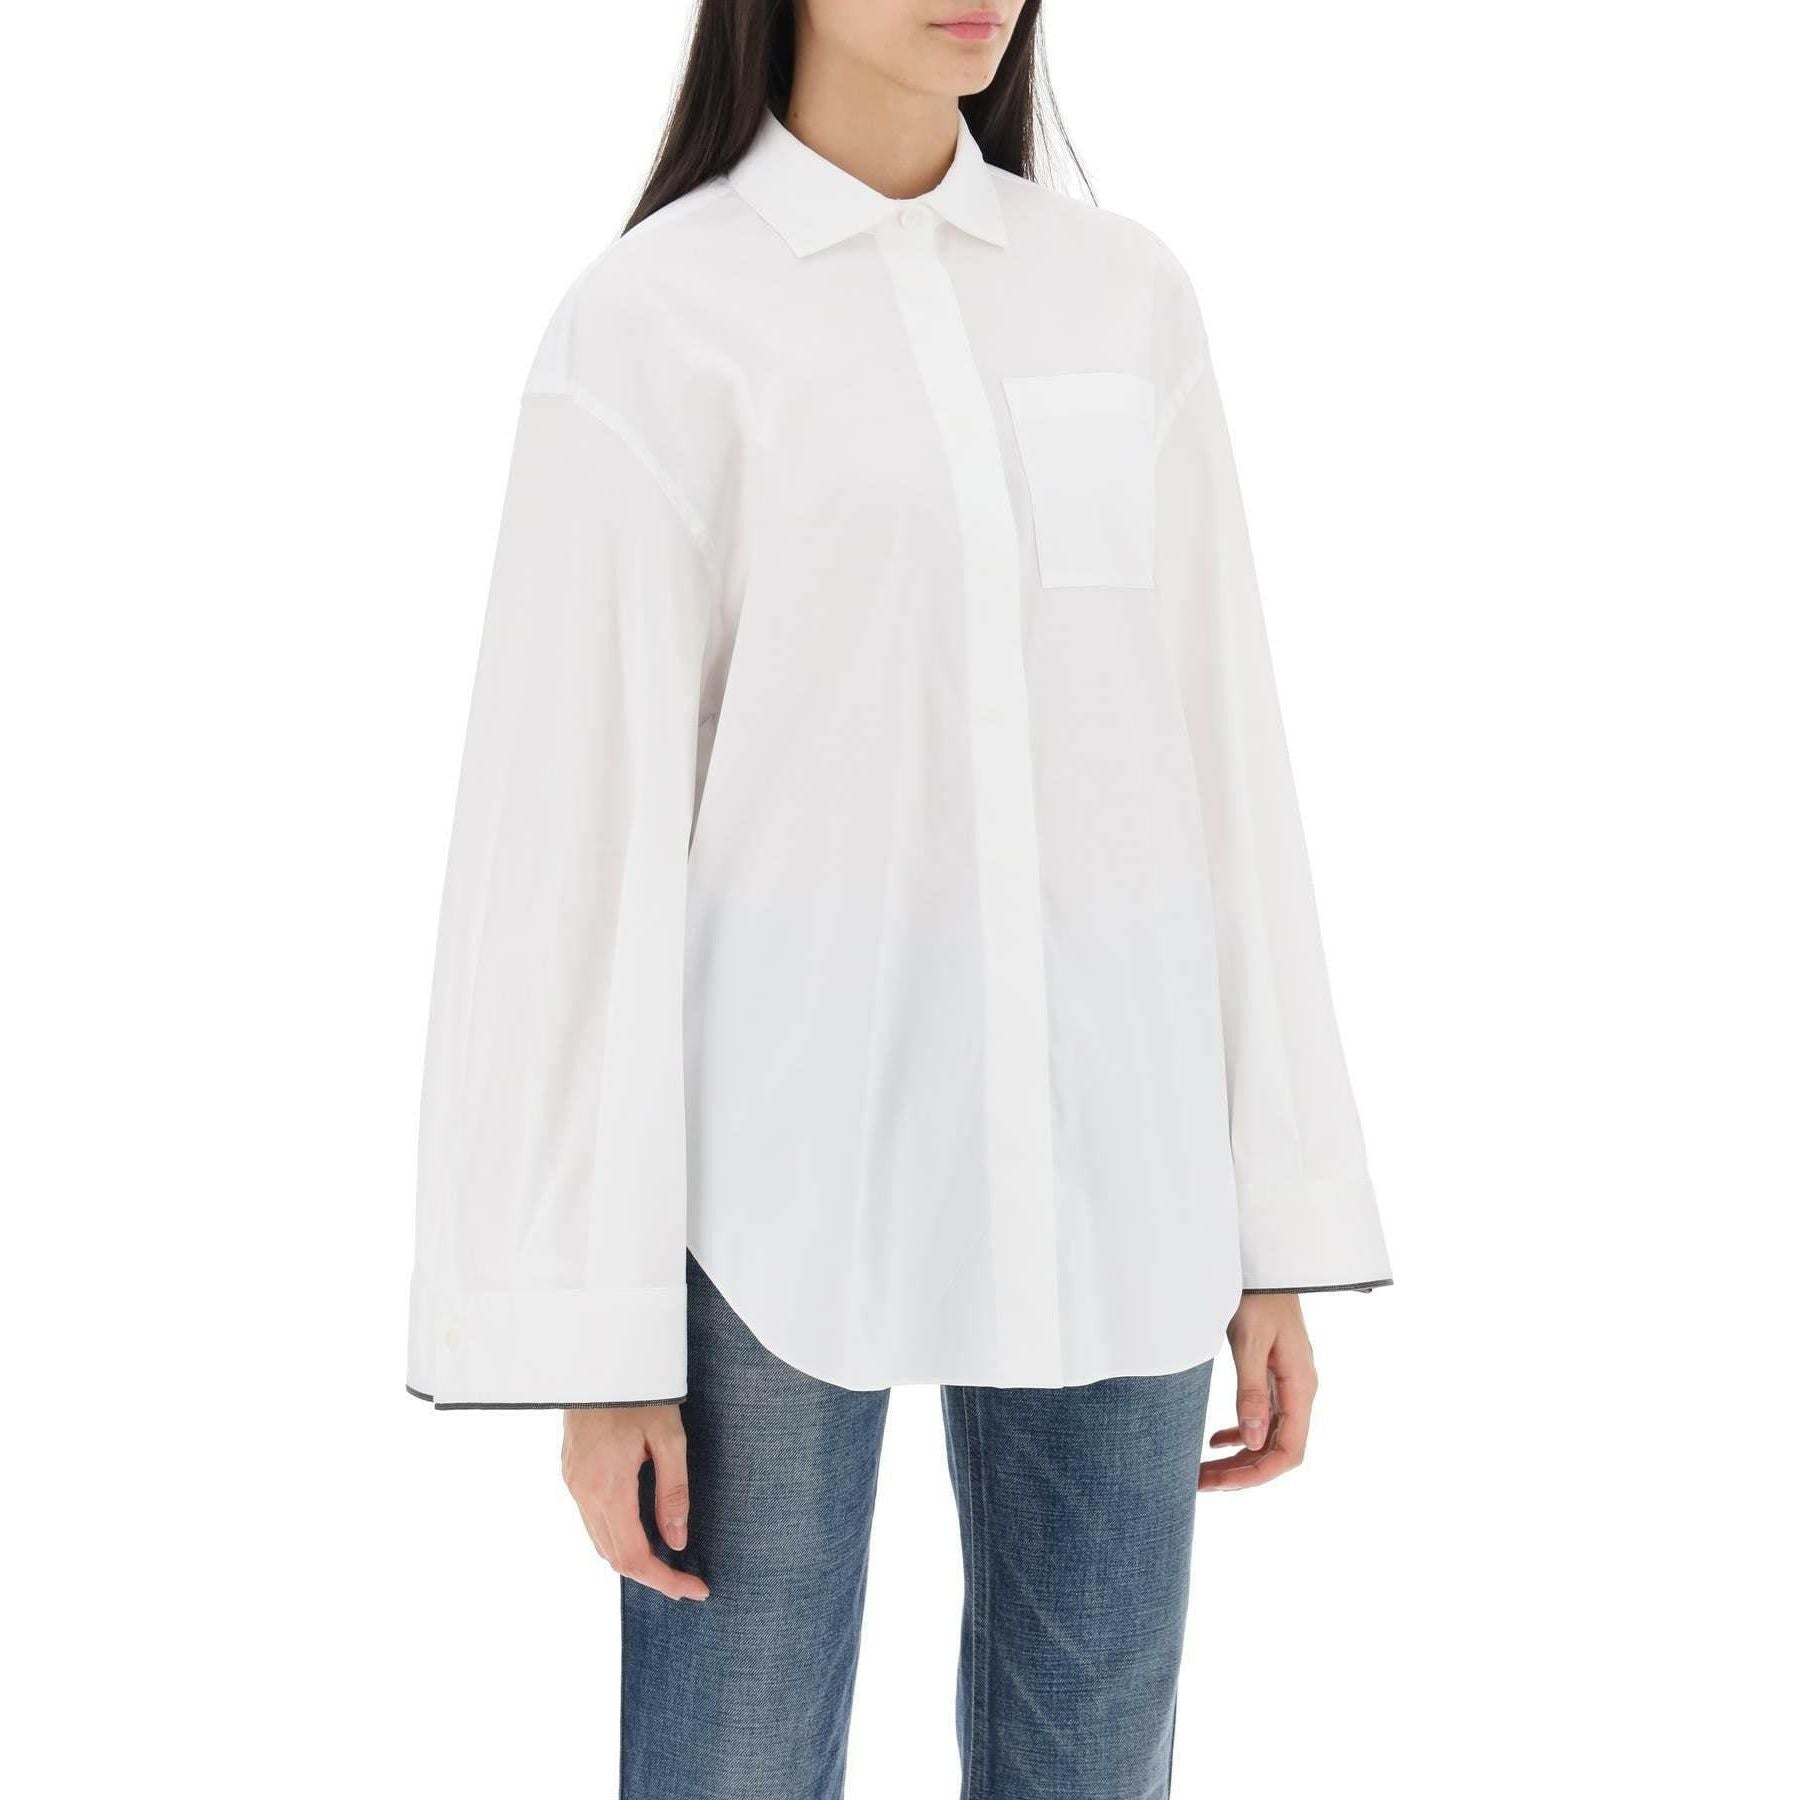 Wide Sleeve Shirt With Shiny Cuff Details BRUNELLO CUCINELLI JOHN JULIA.